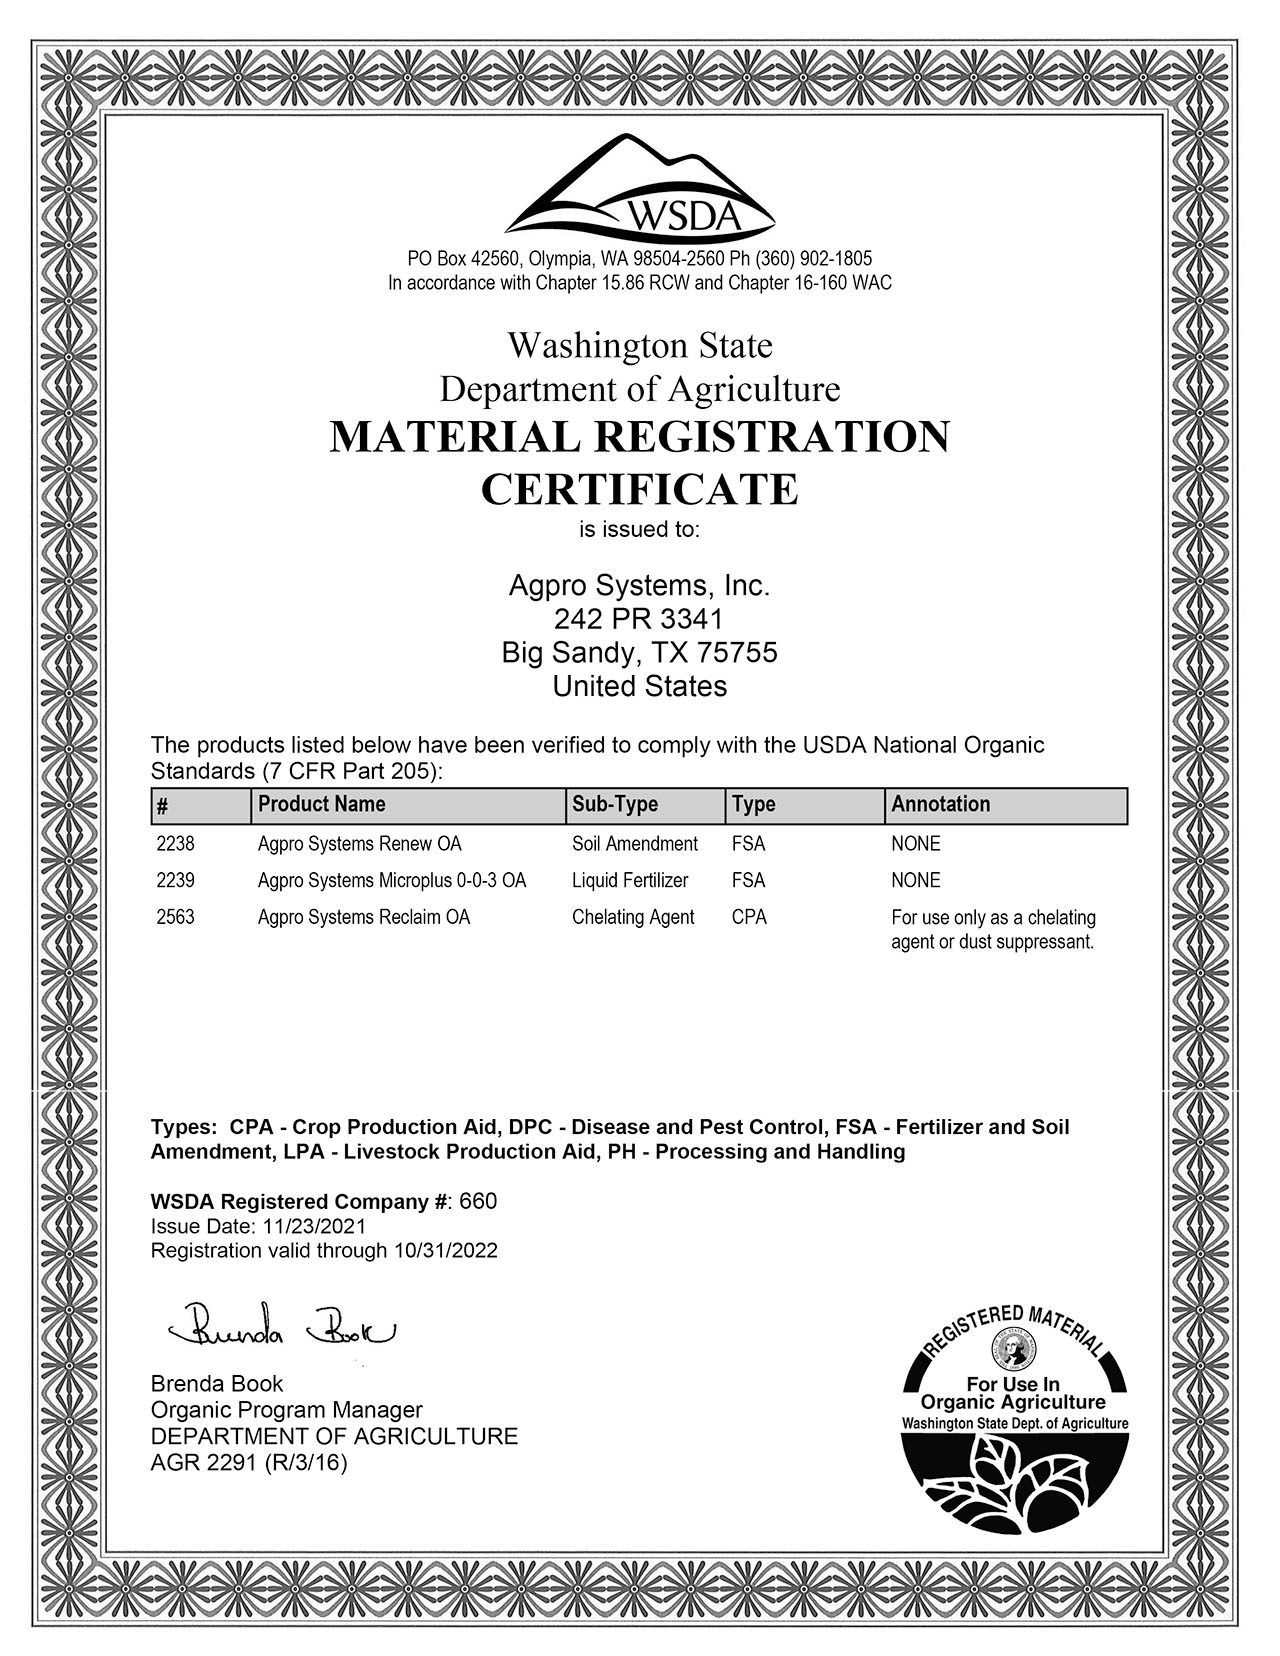 AgPro WSDA Organic Certificate